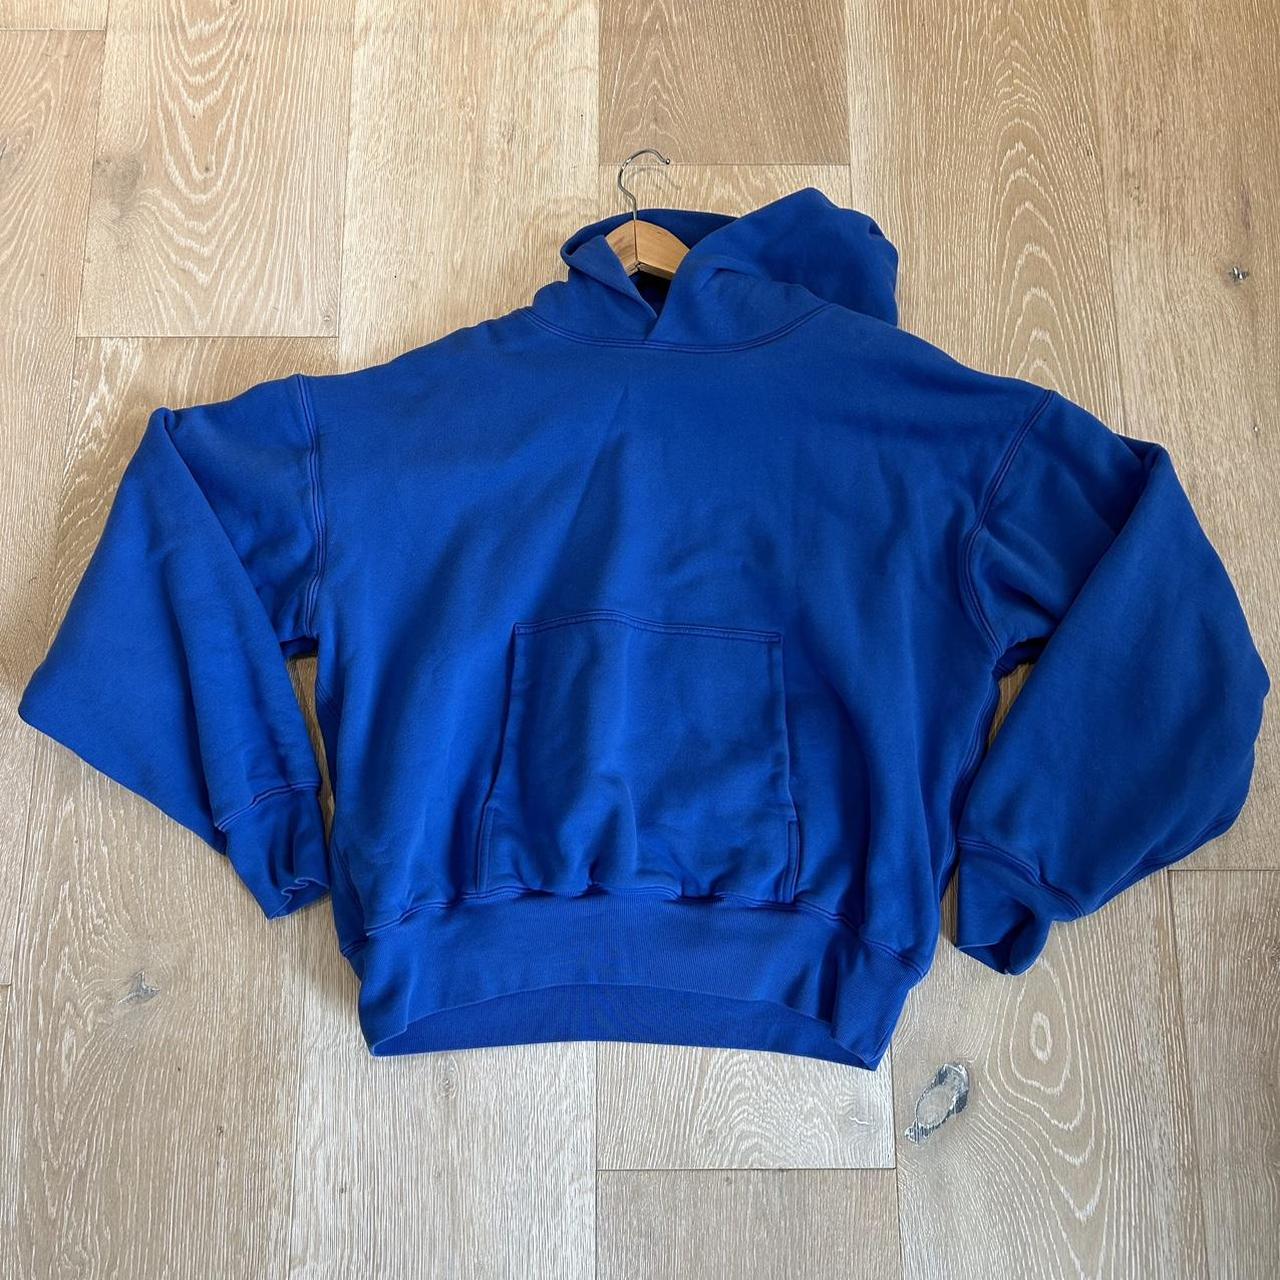 Yeezy x Gap Blue hoodie Size L, baggy cropped fit... - Depop